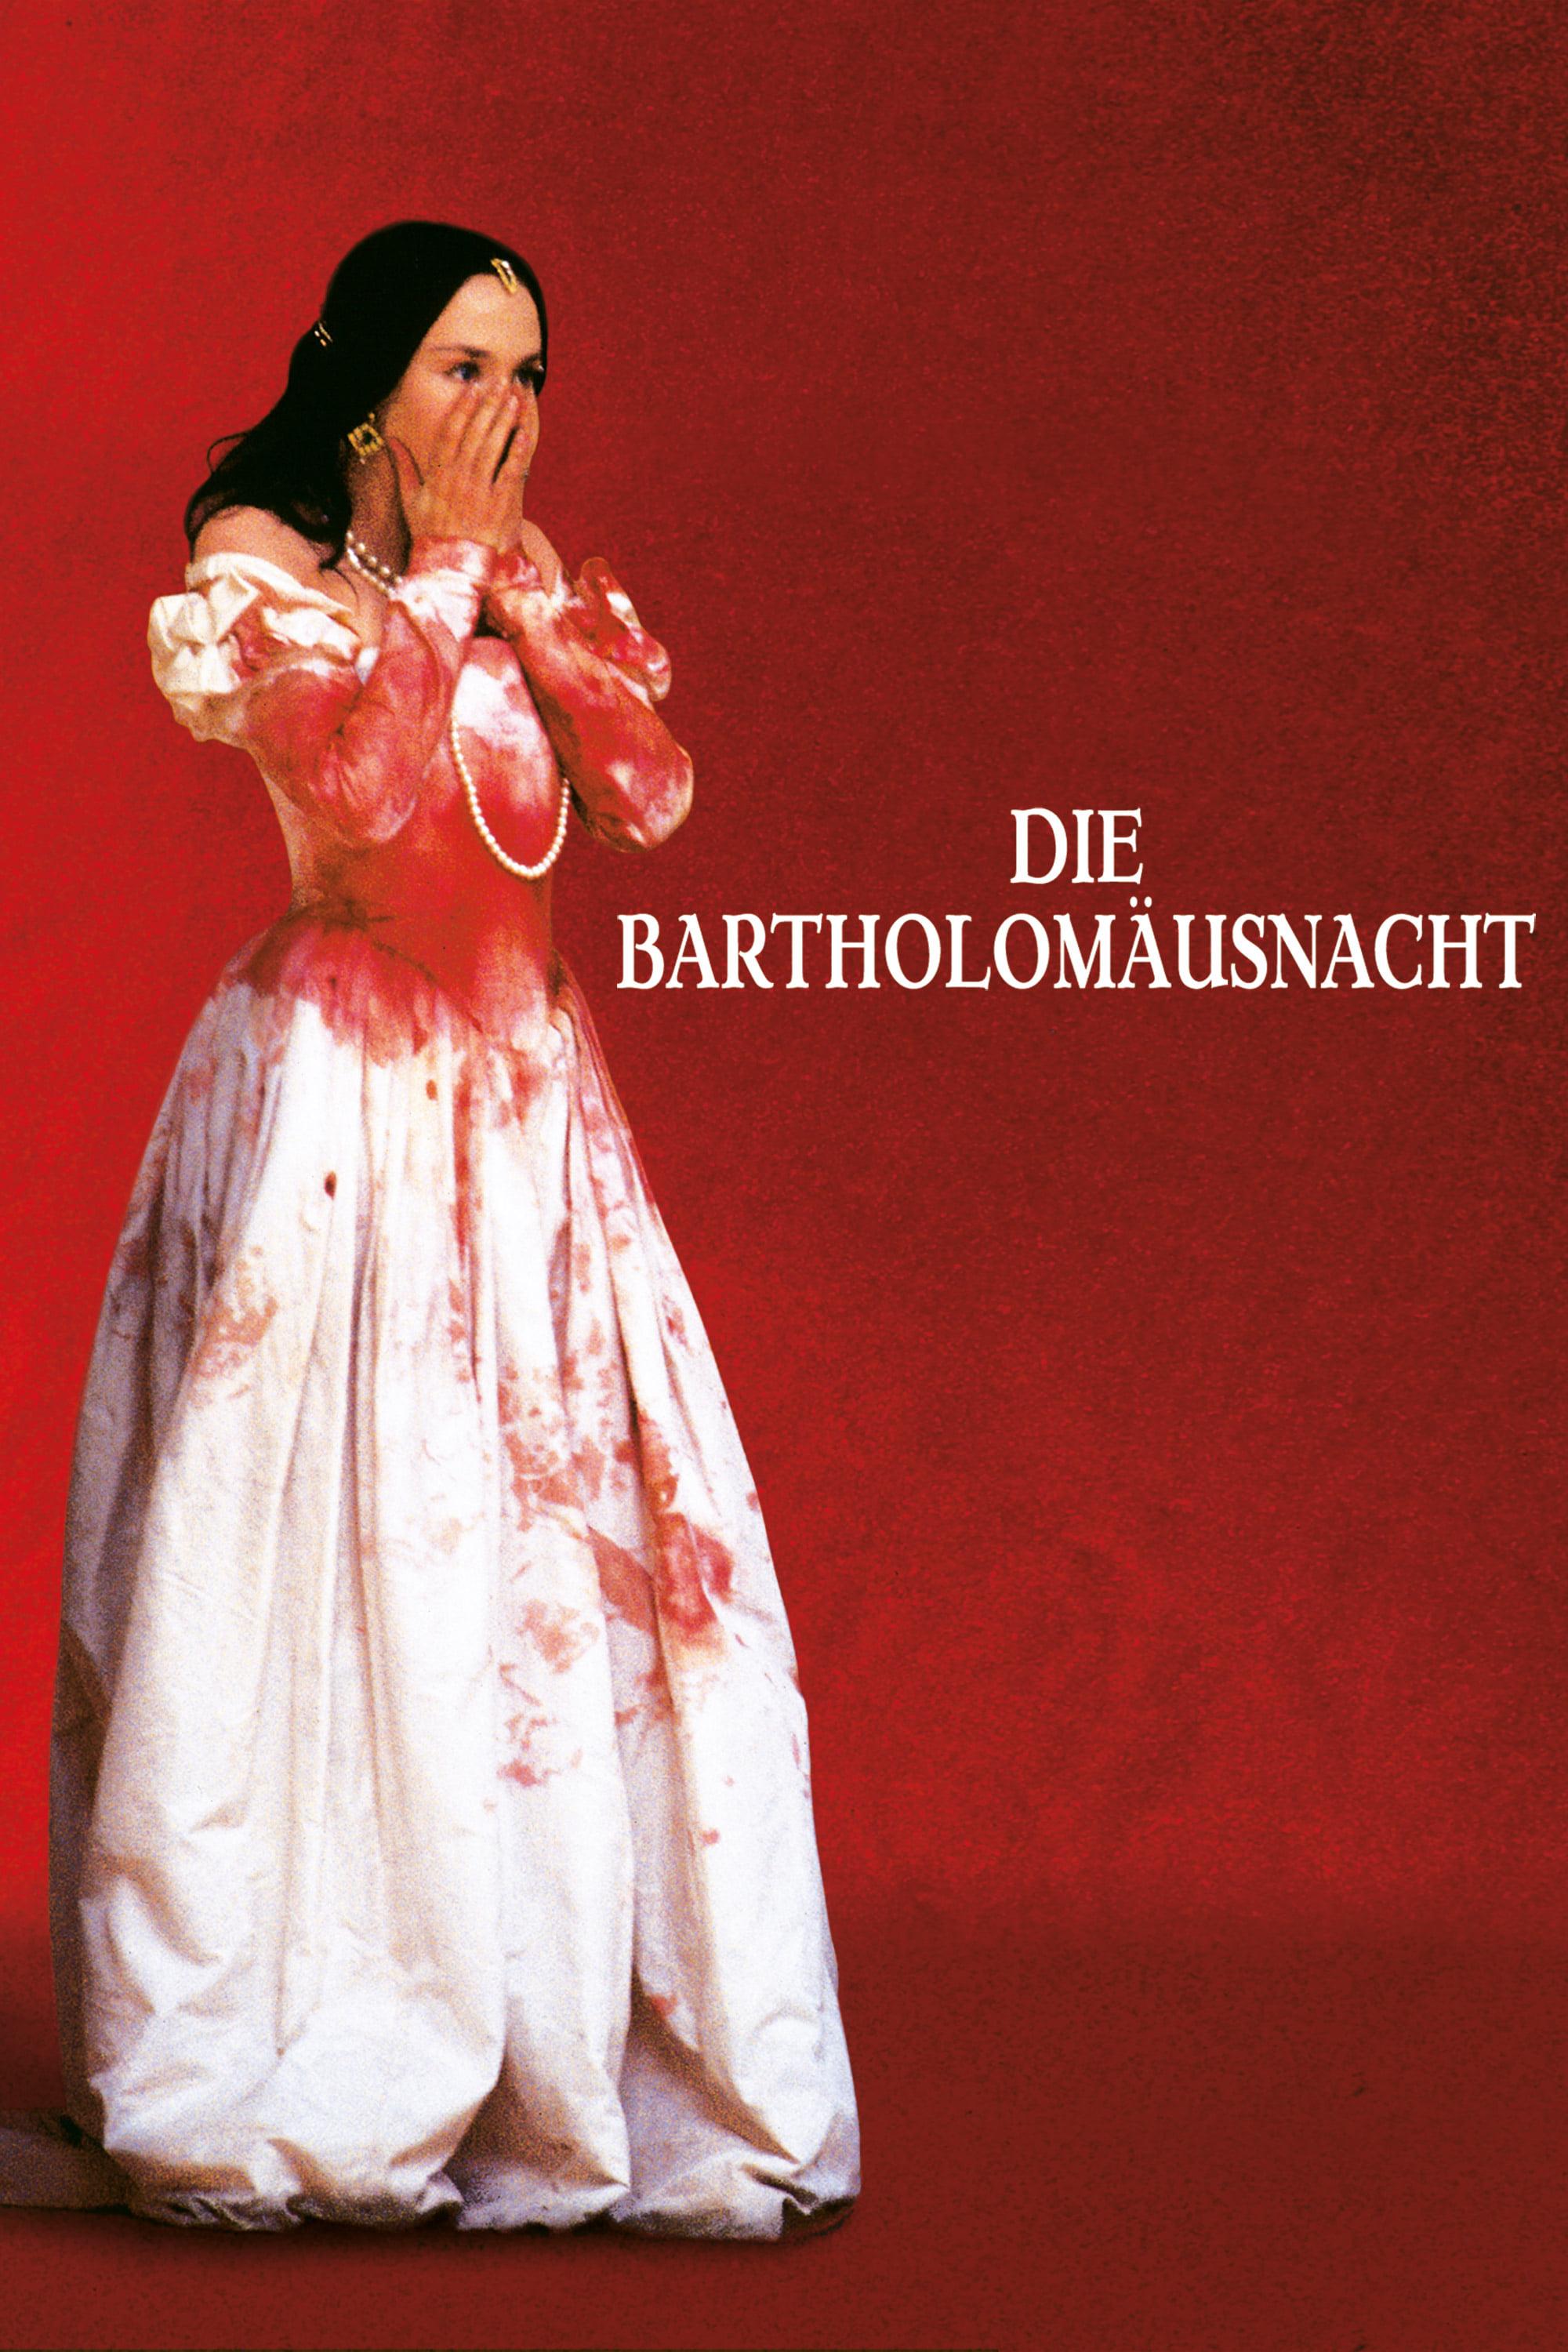 Die Bartholomäusnacht poster